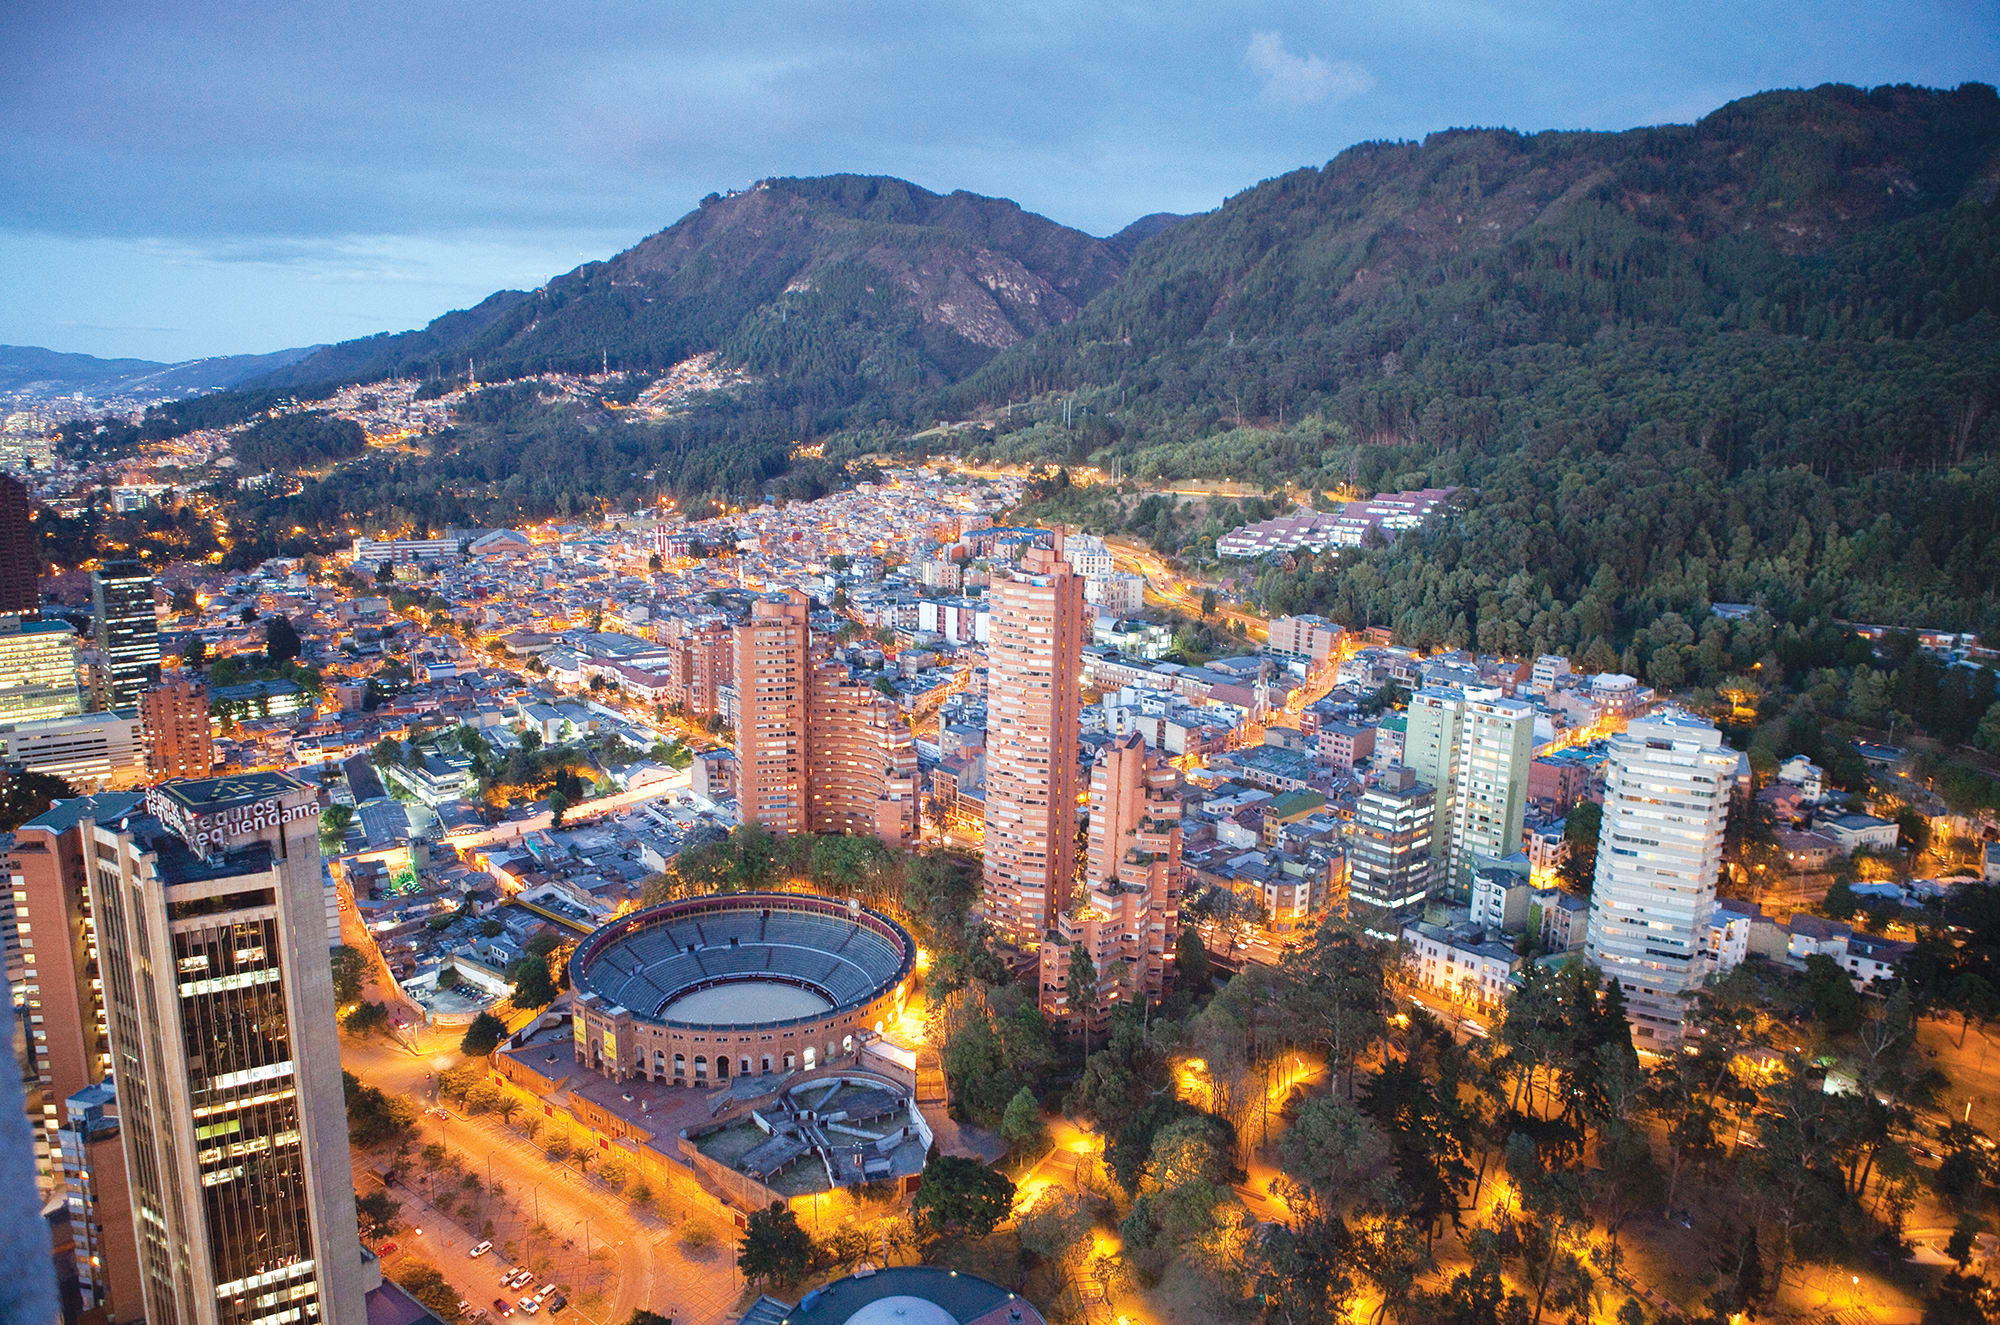 Столица колумбии название. Республика Колумбия Богота. Санта Фе де Богота. Богота столица Колумбии. Город в Колумбии Богота Колумбия.